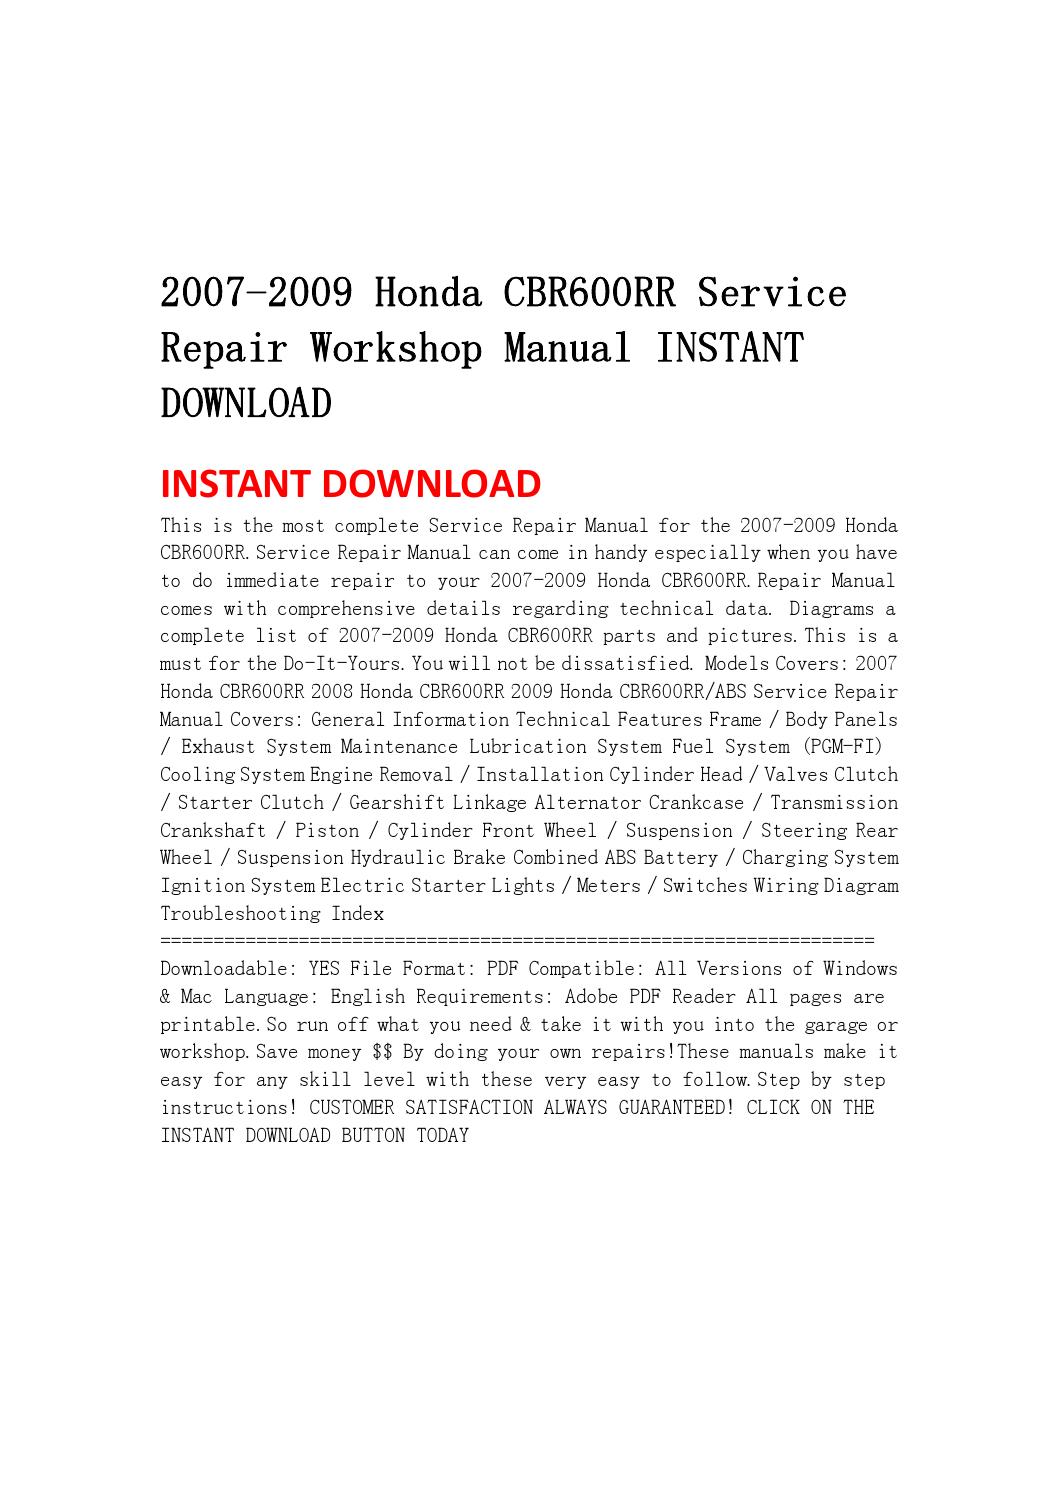 2010 Cbr600rr Manual Download